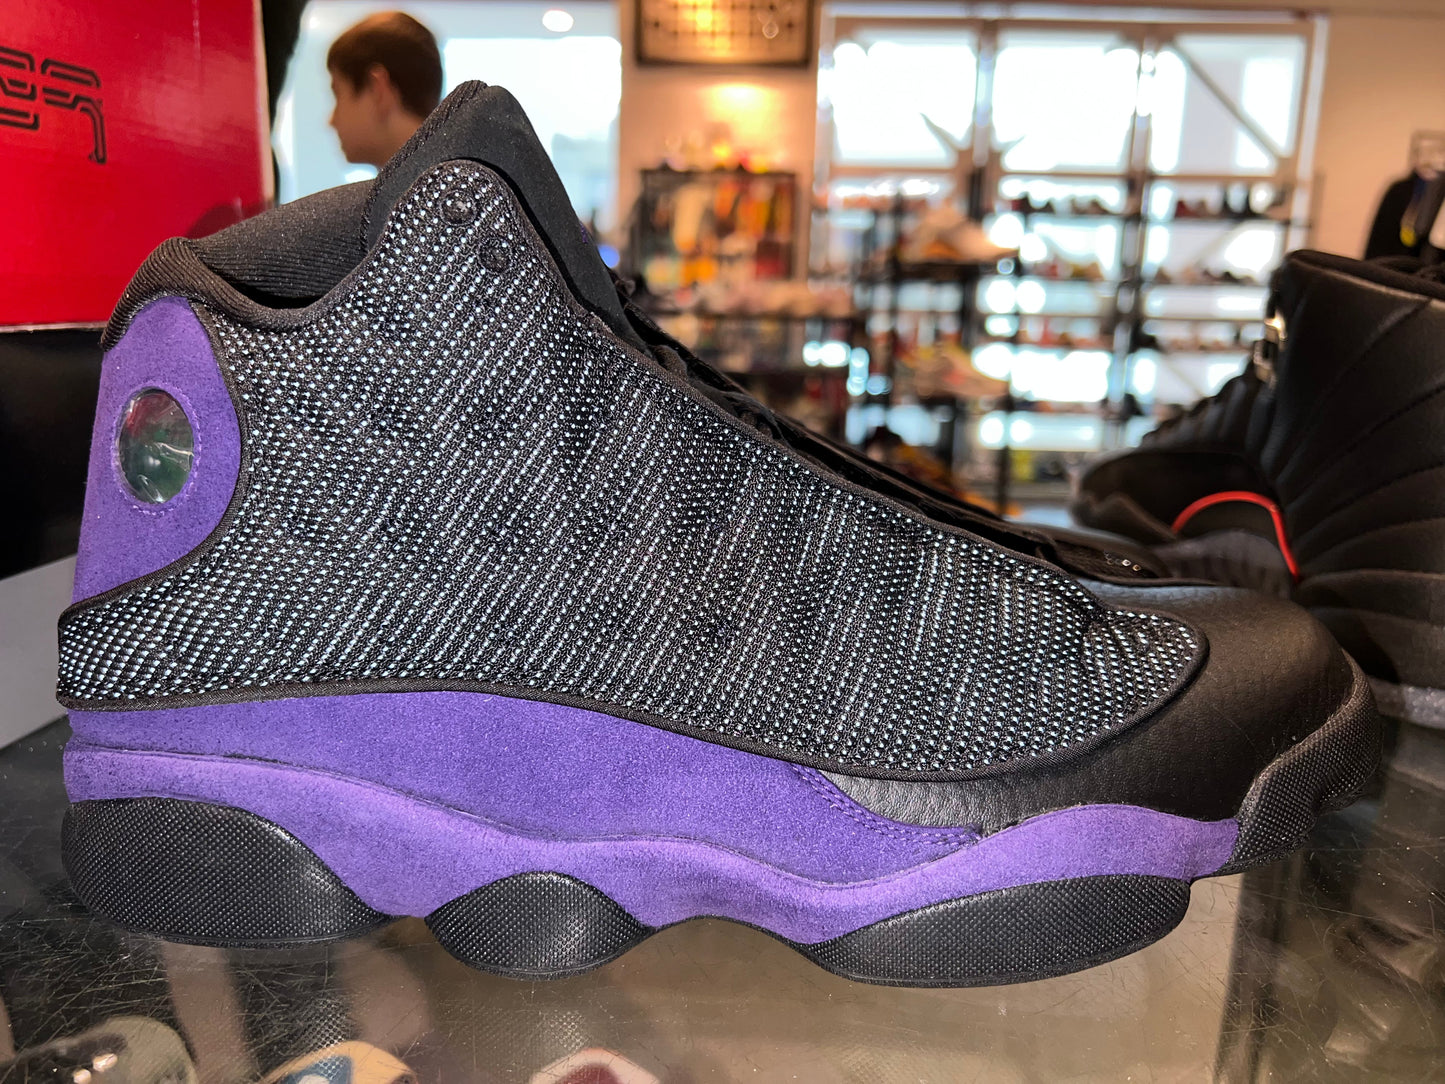 Size 12 Air Jordan 13 “Court Purple” Brand New (Mall)